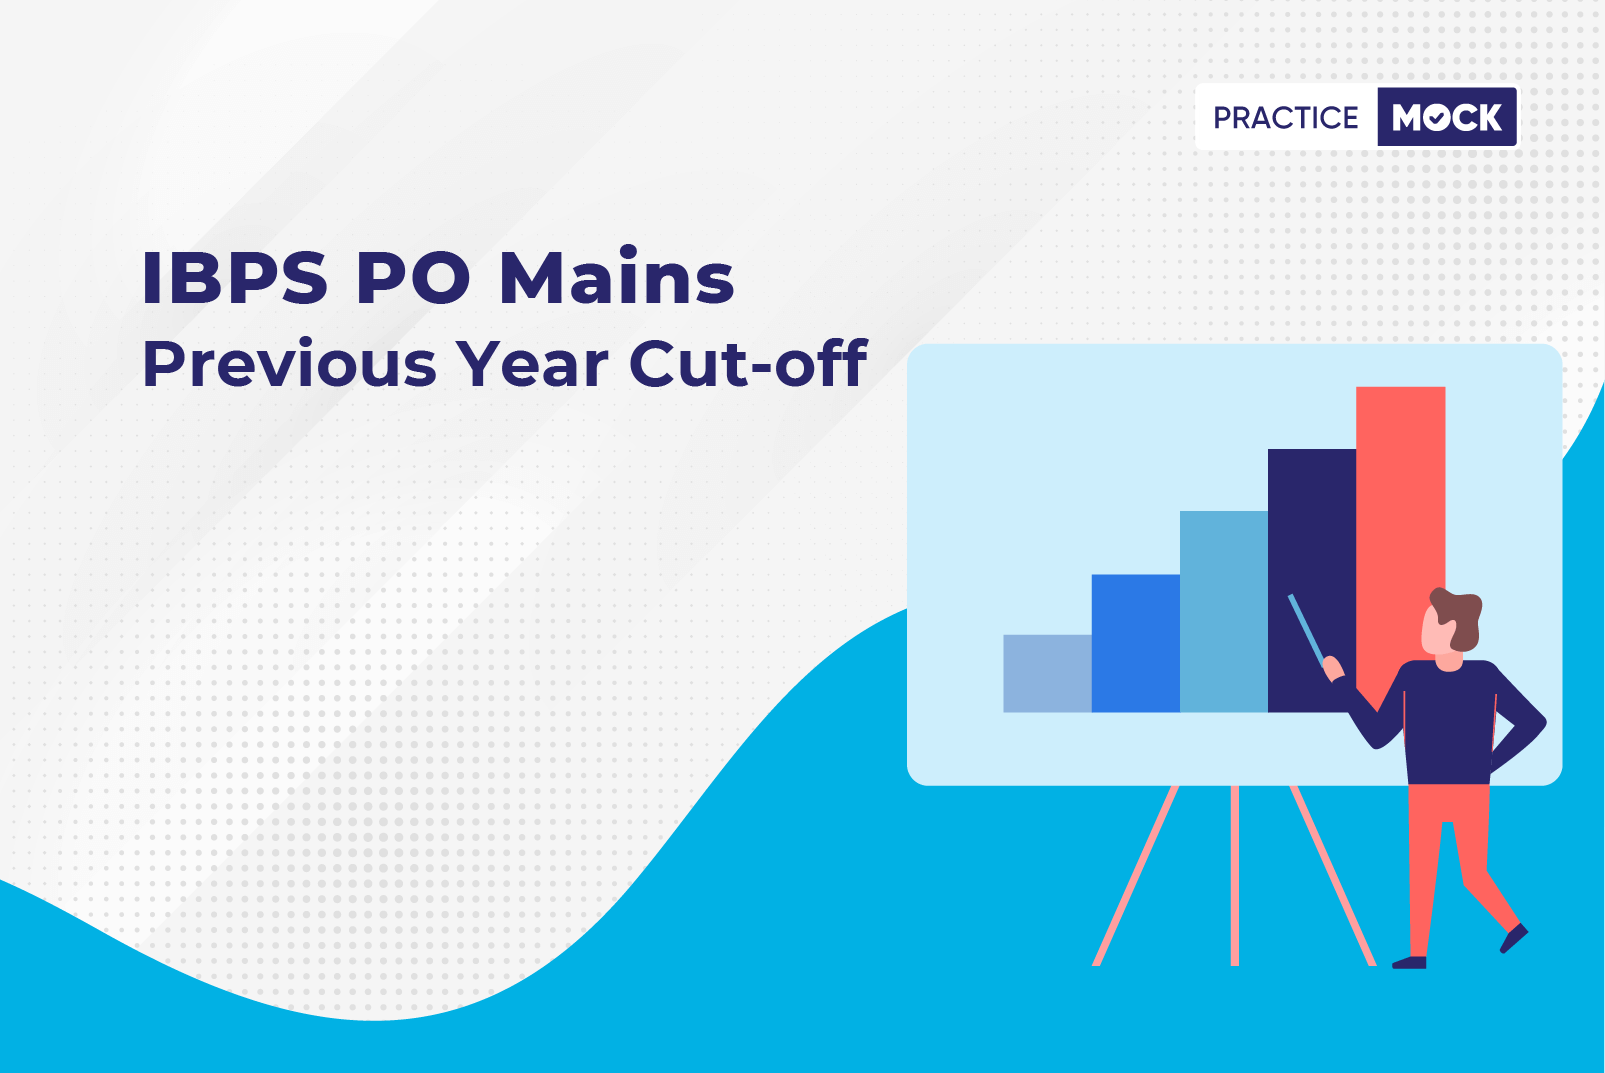 IBPS PO Mains Previous Year Cut-off